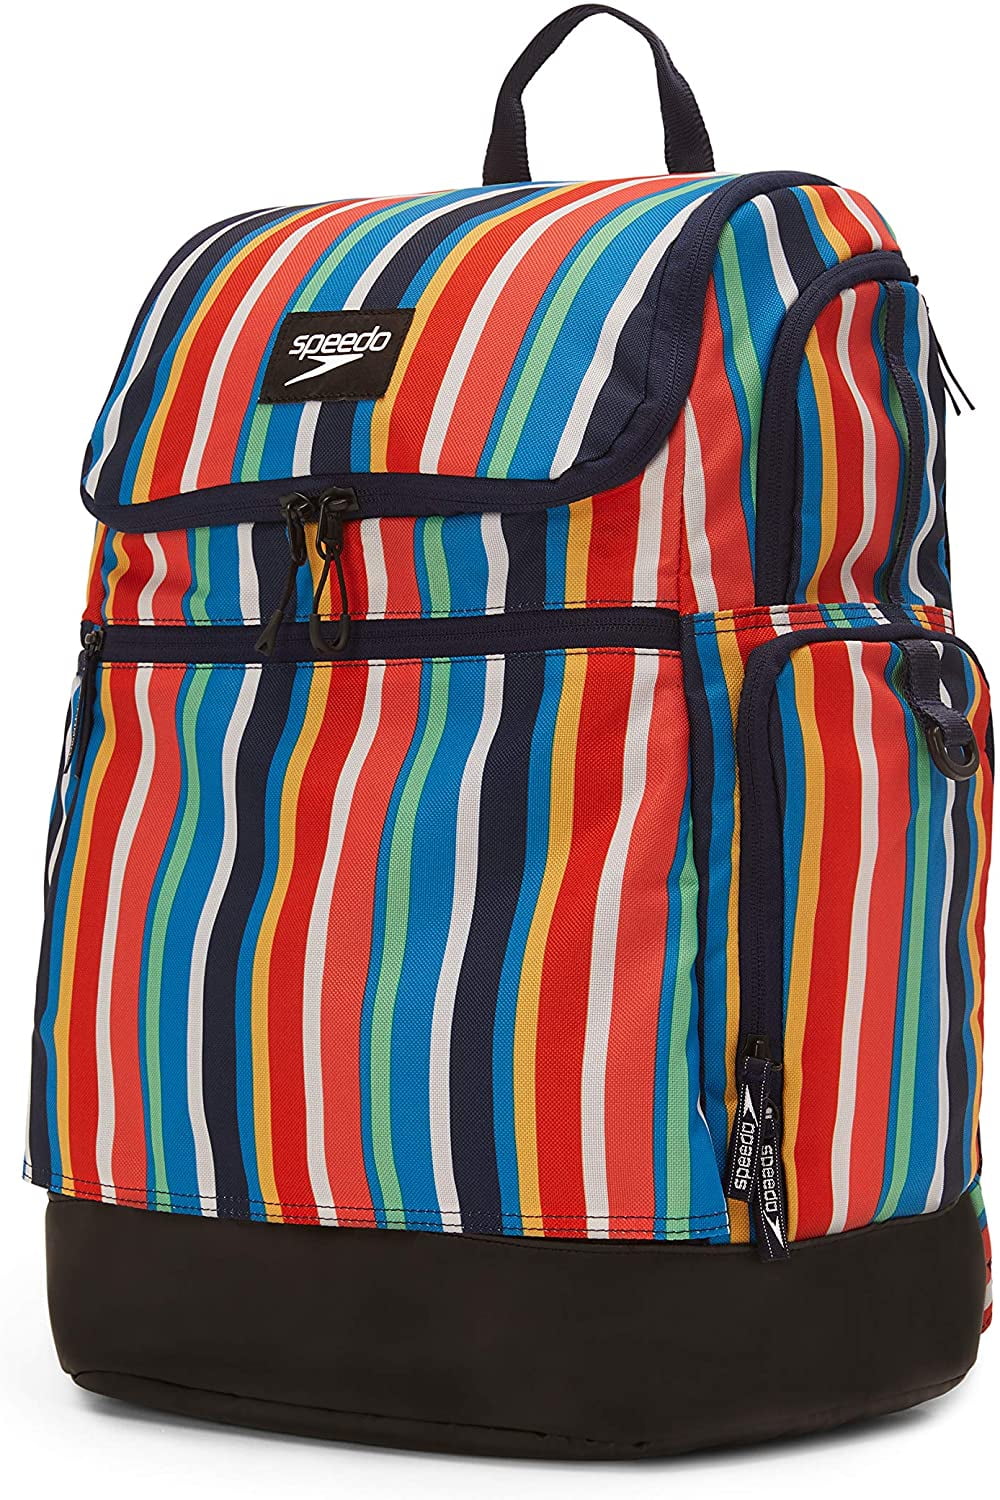 Speedo Unisex-Adult Large Teamster Backpack 35-Liter 